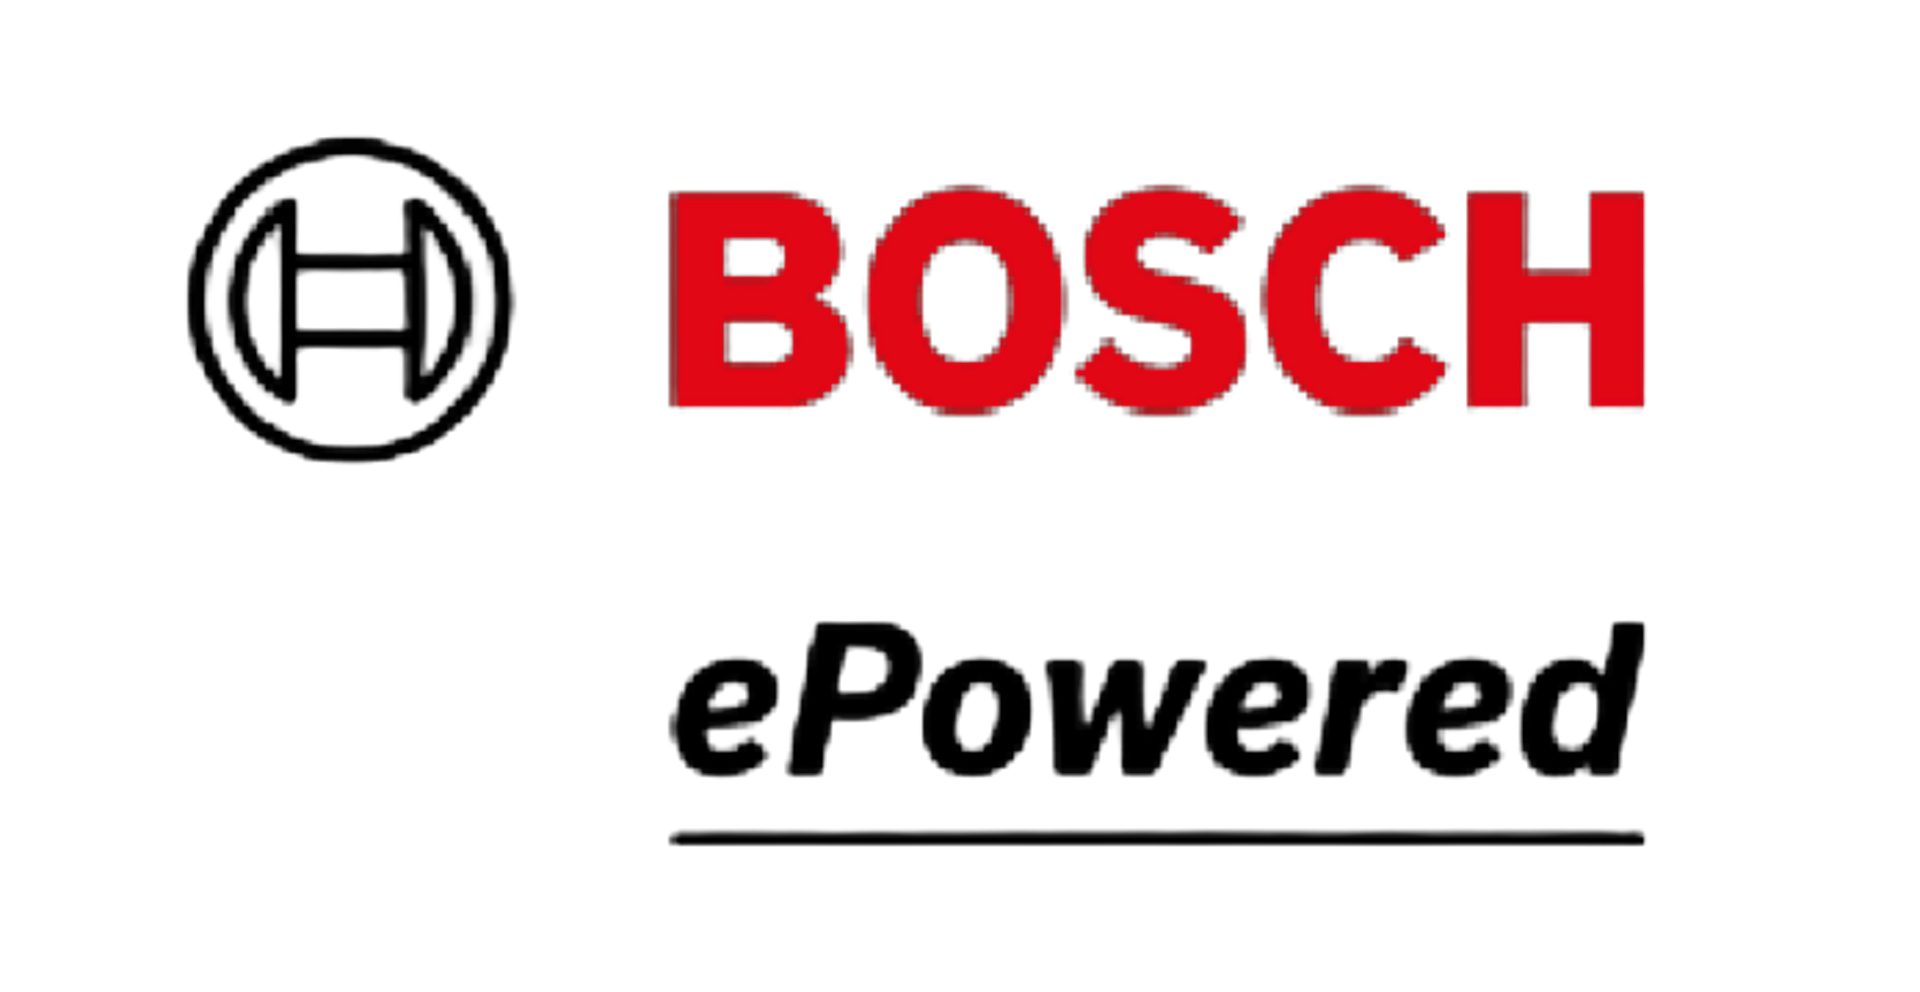 MAGURA Bosch Parts & Services GmbH & Co. KG